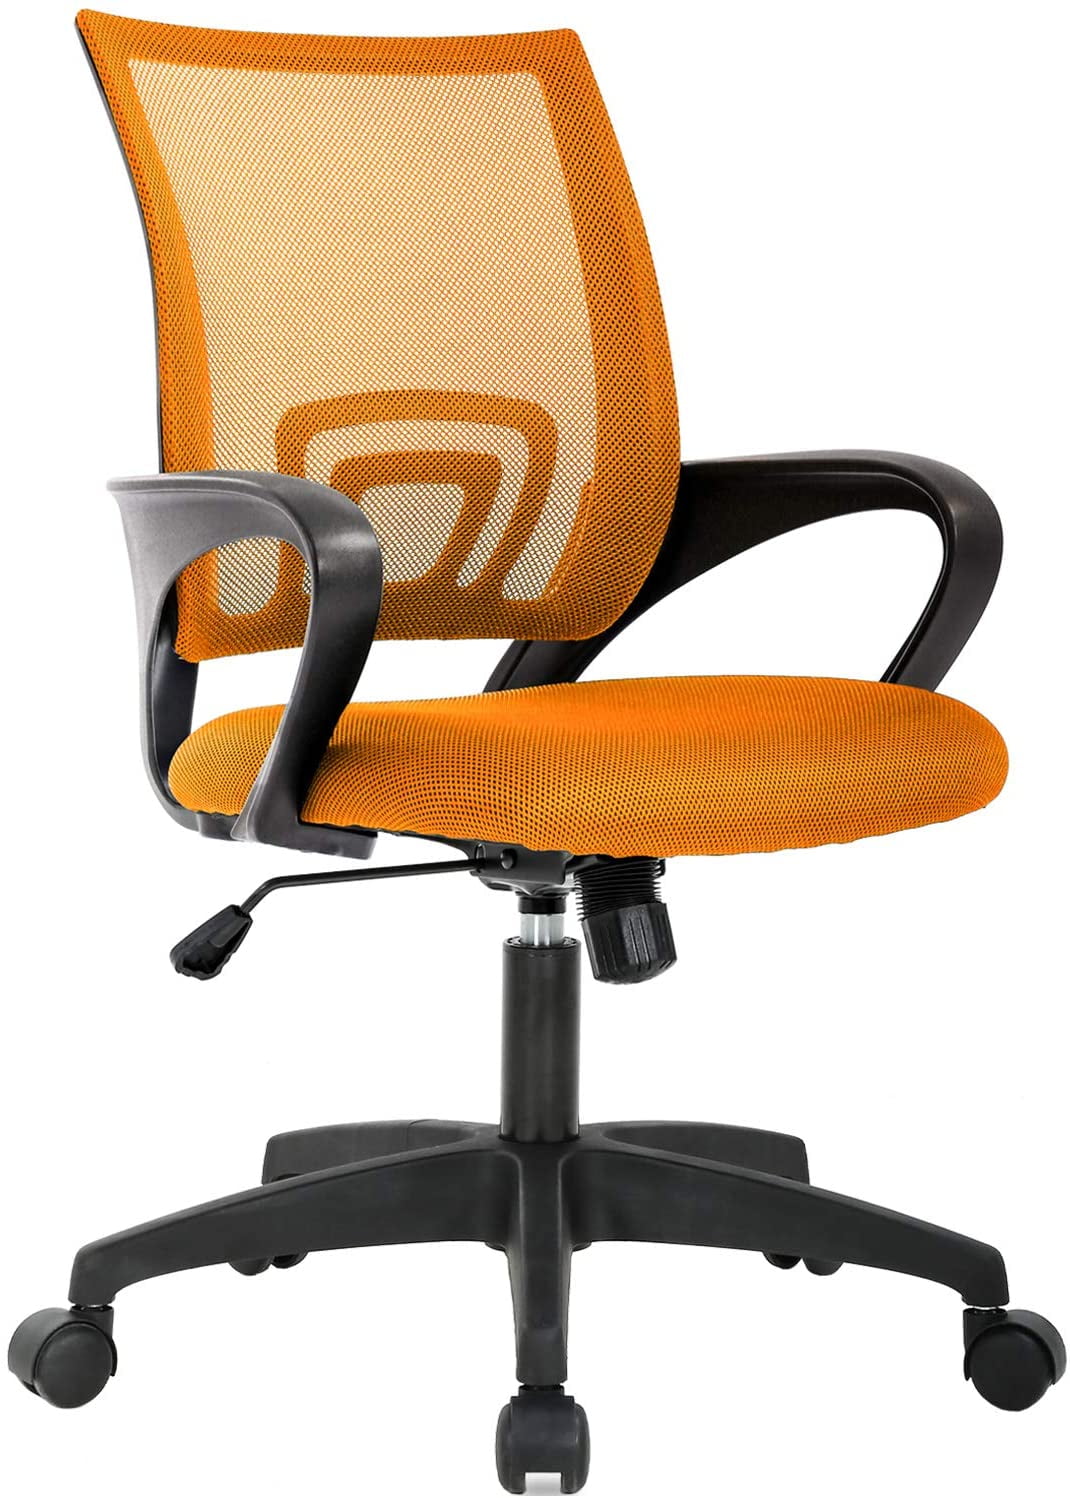 orange chair for office care center oambati 4826 Playmobil safari p228 